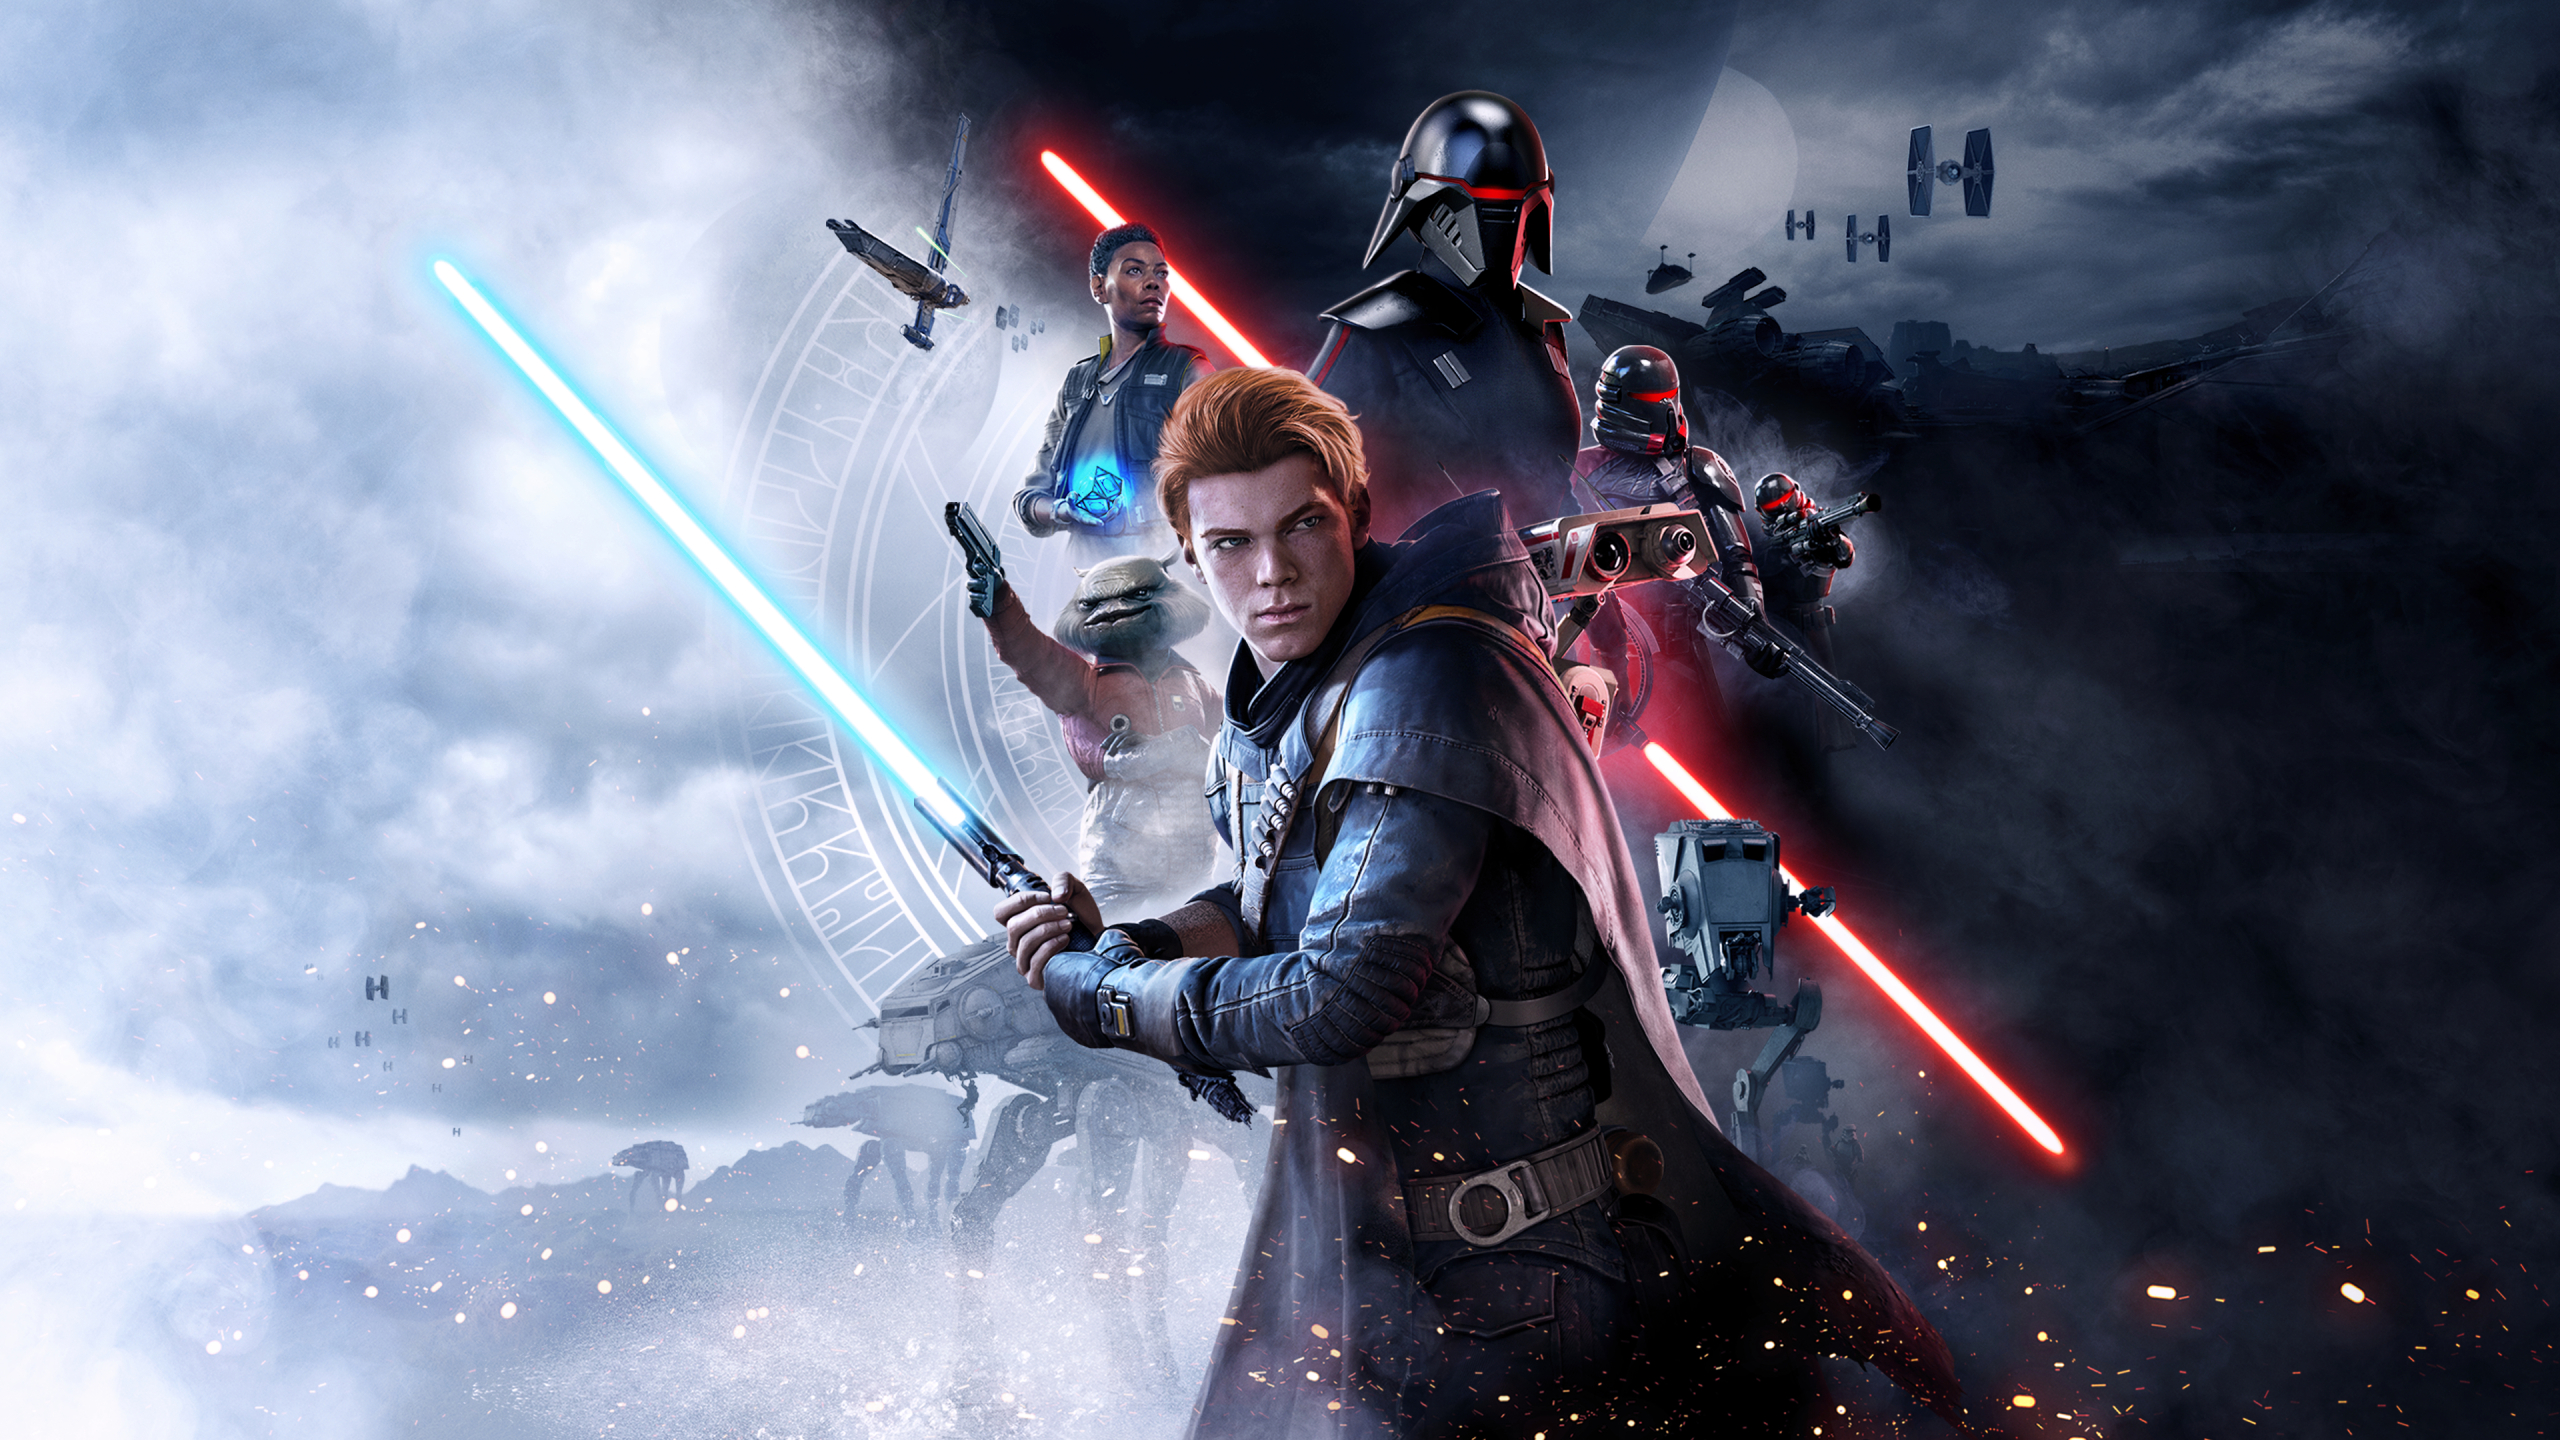 2560x1440 Star Wars Jedi Fallen Order Poster 2019 1440P ...